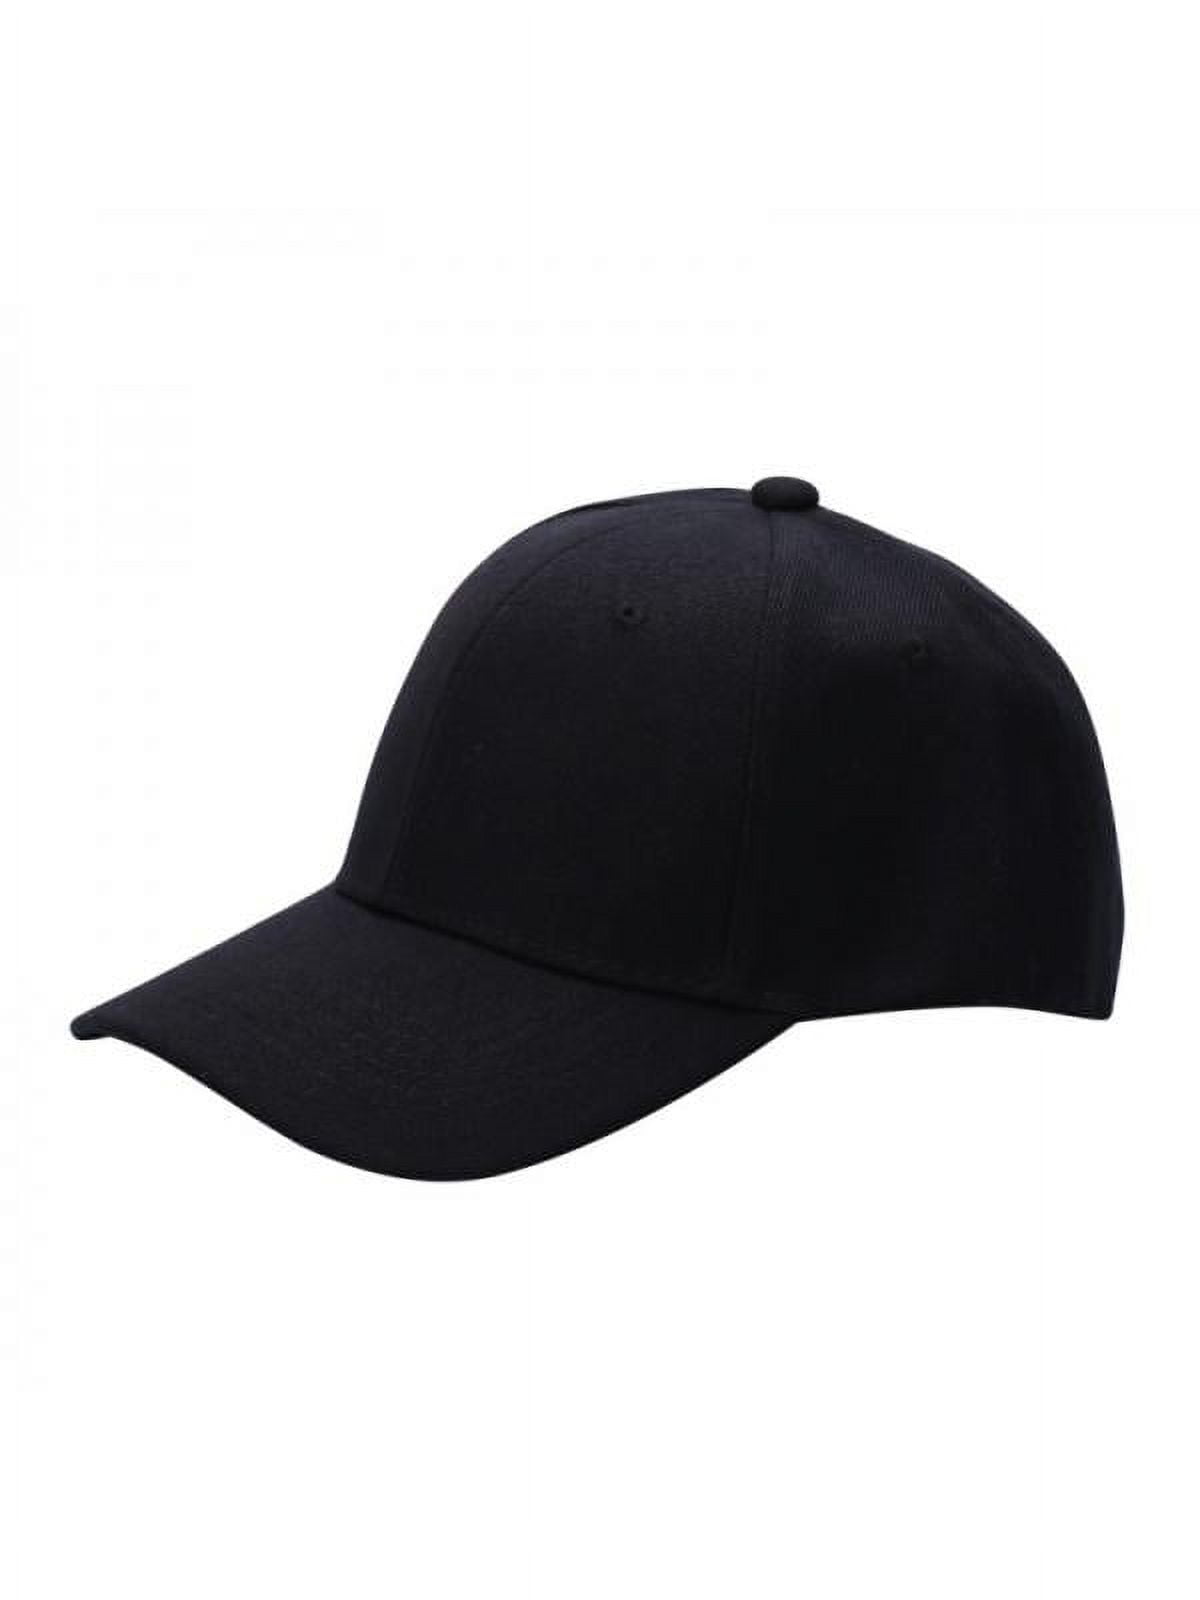 Men Women Black Baseball Cap Adjustable Curved Visor Hat - Walmart.com